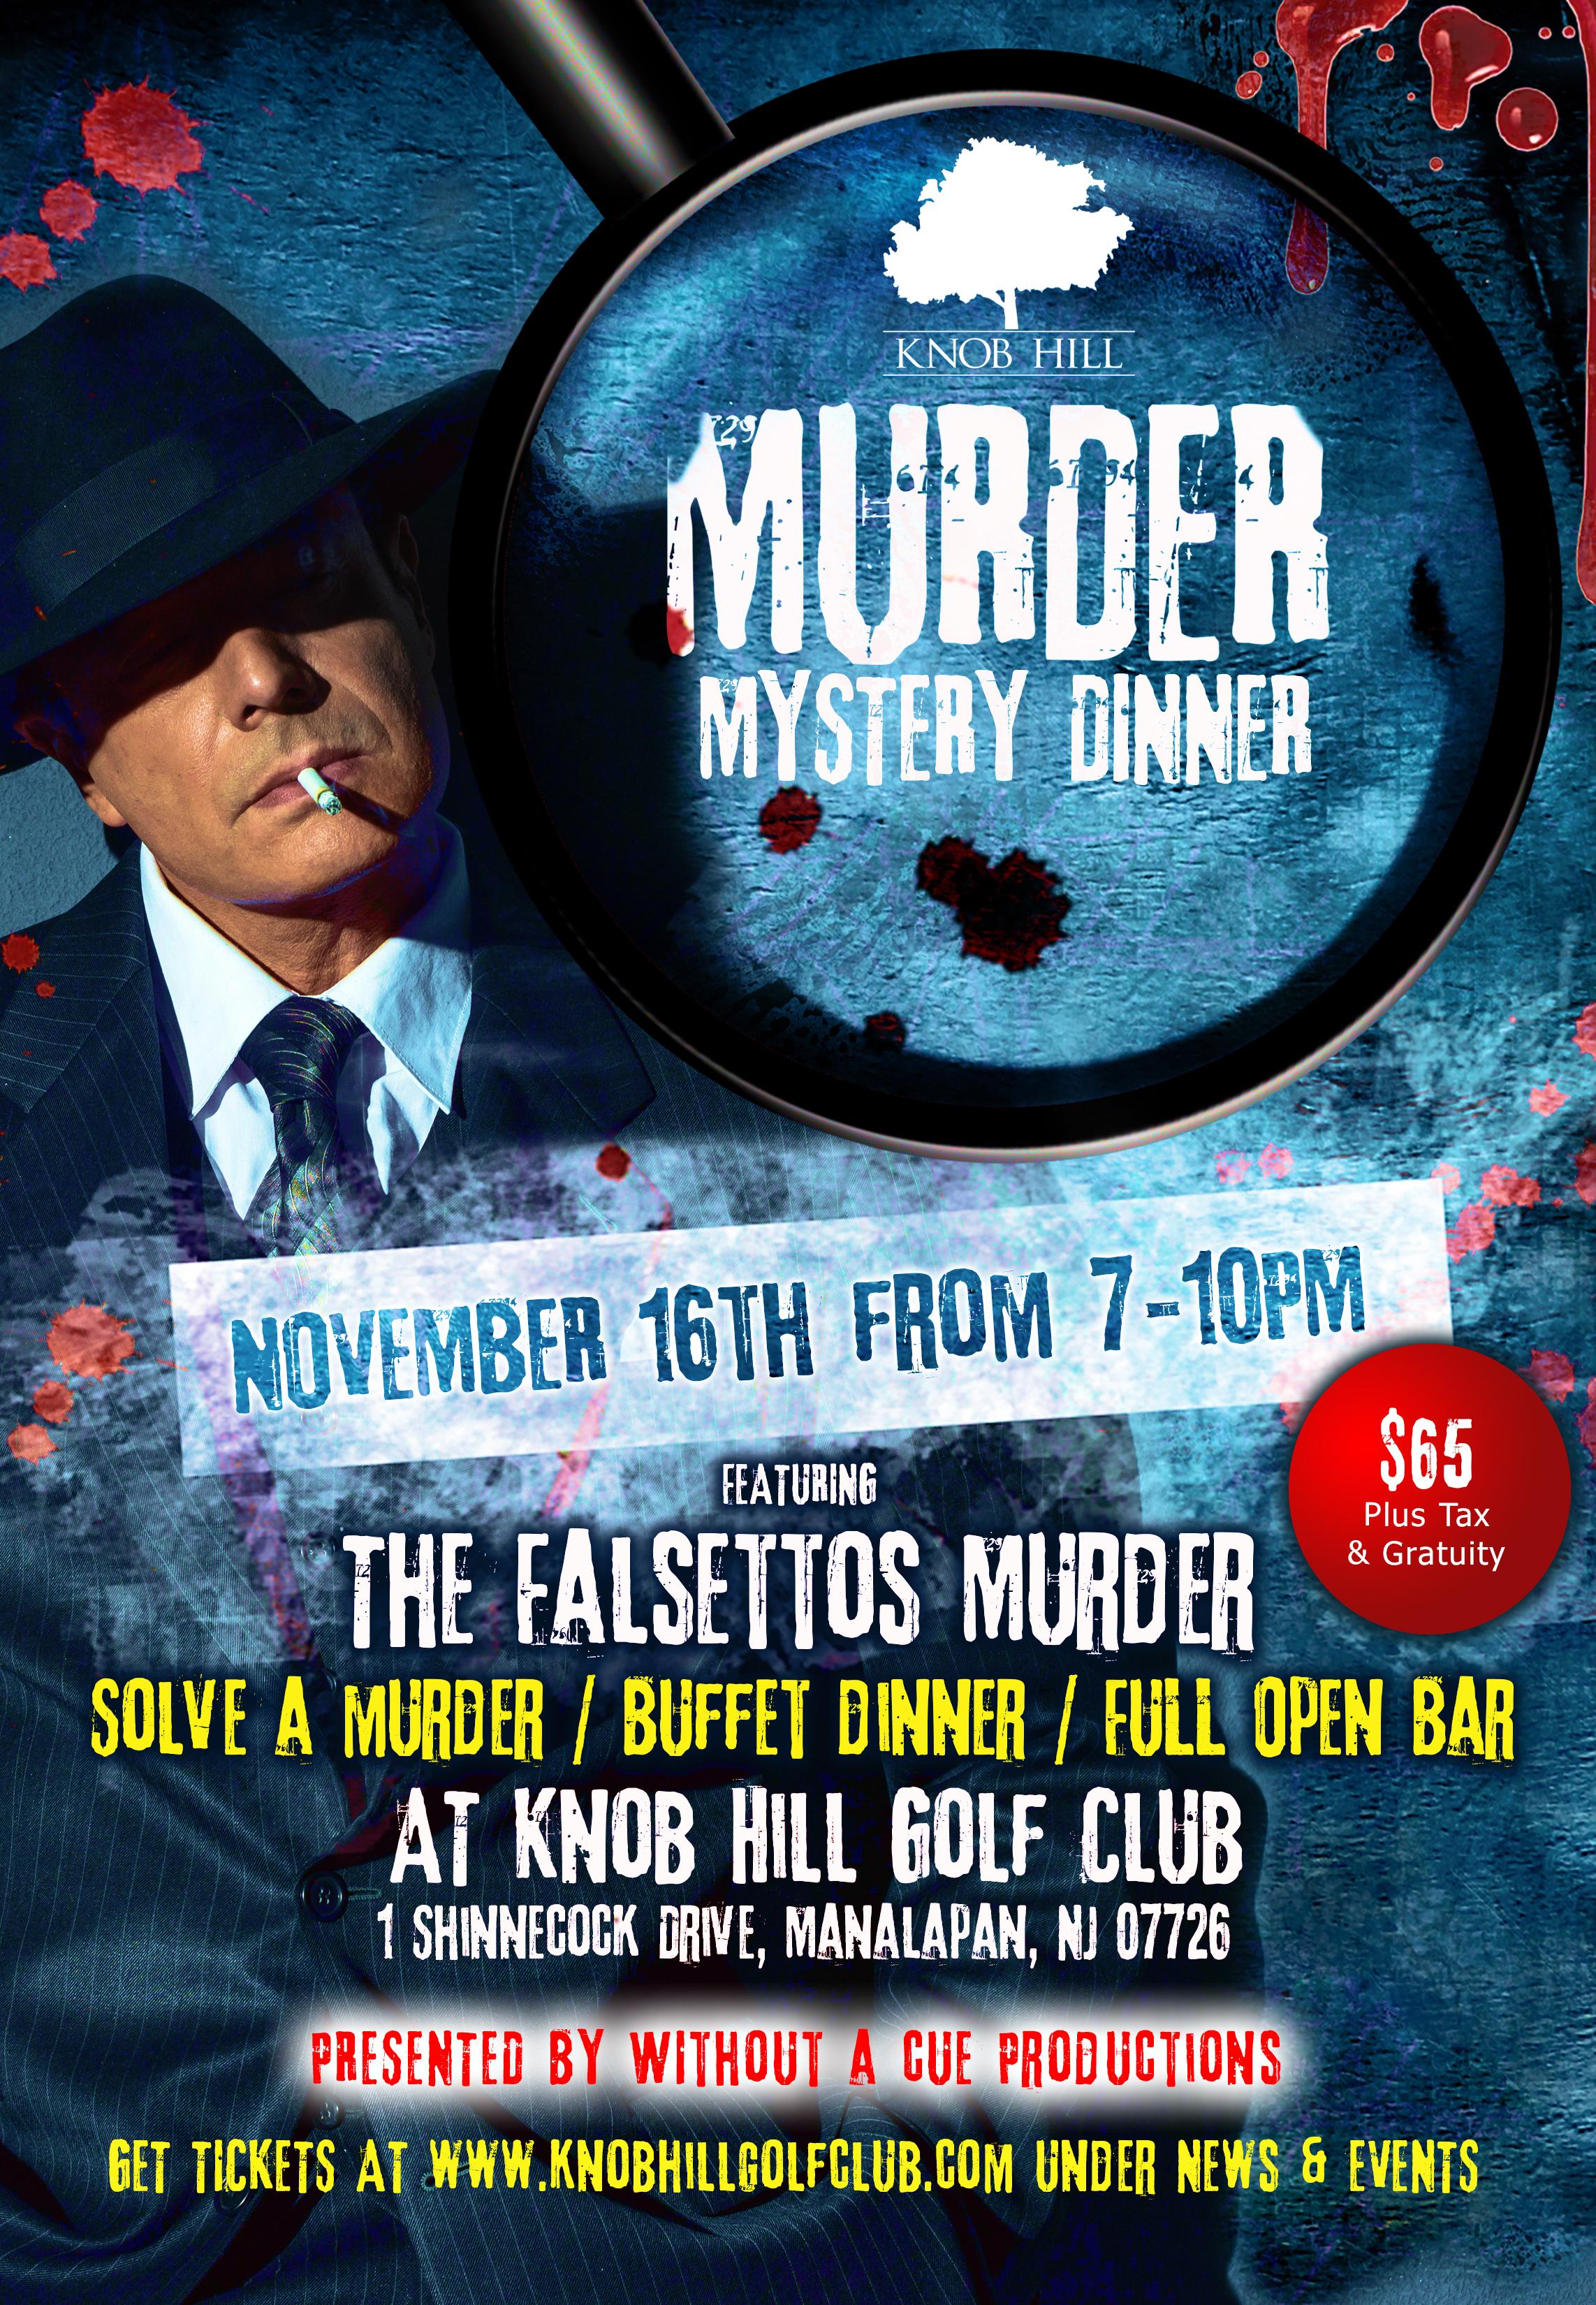 Murder Mystery Dinner at Knob Hill Golf Club